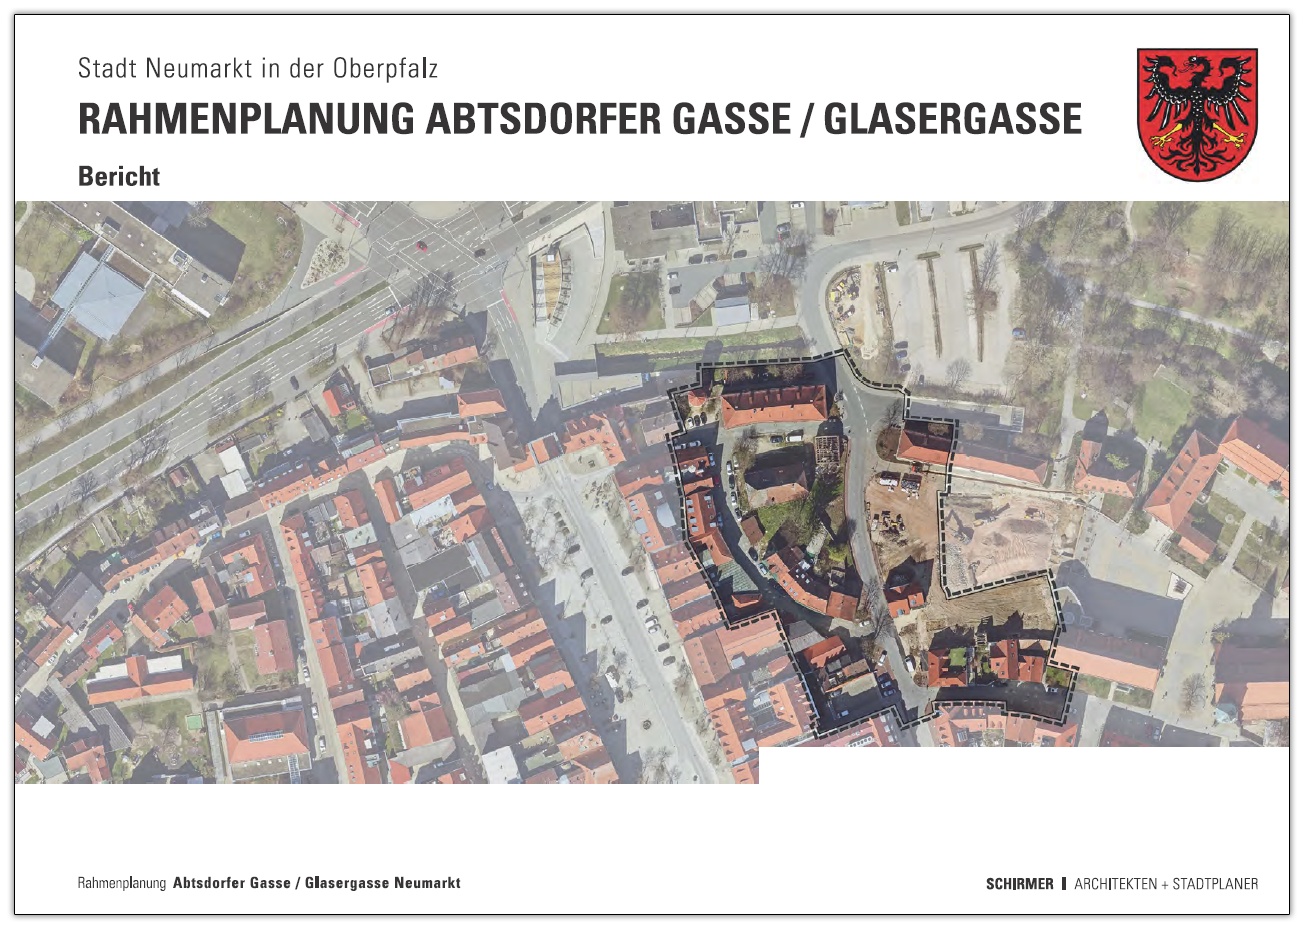 Rahmenplan Abtsdorfer Gasse / Glasergasse